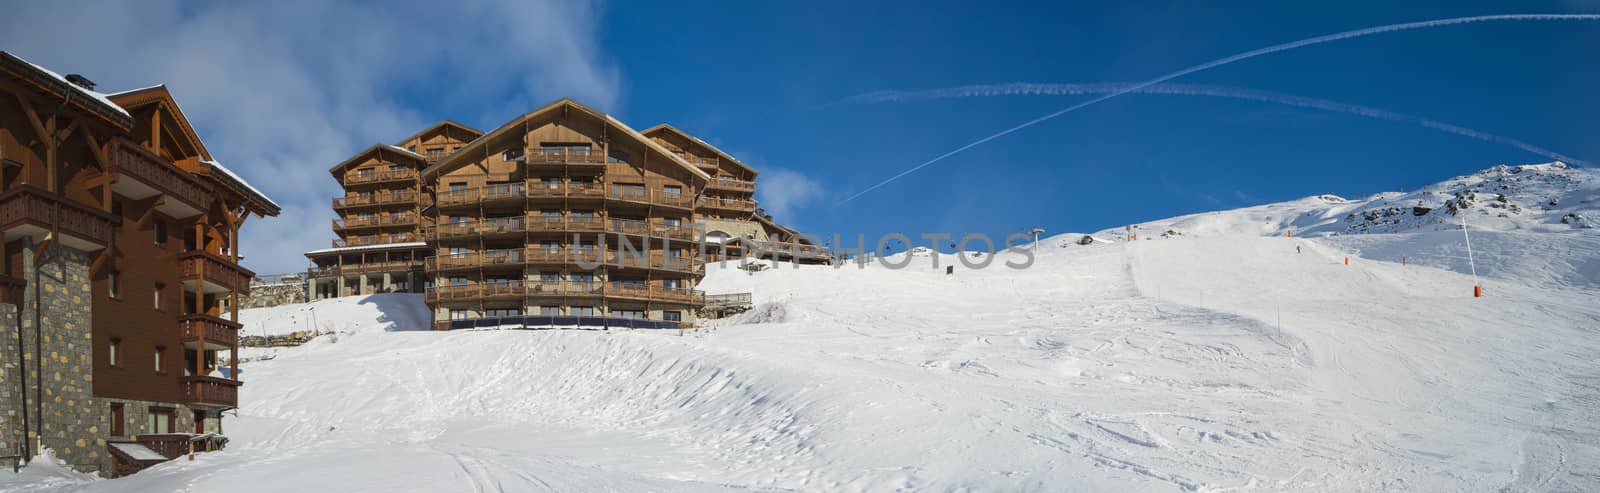 Slope in alpine ski resort with apartment buildings by paulvinten